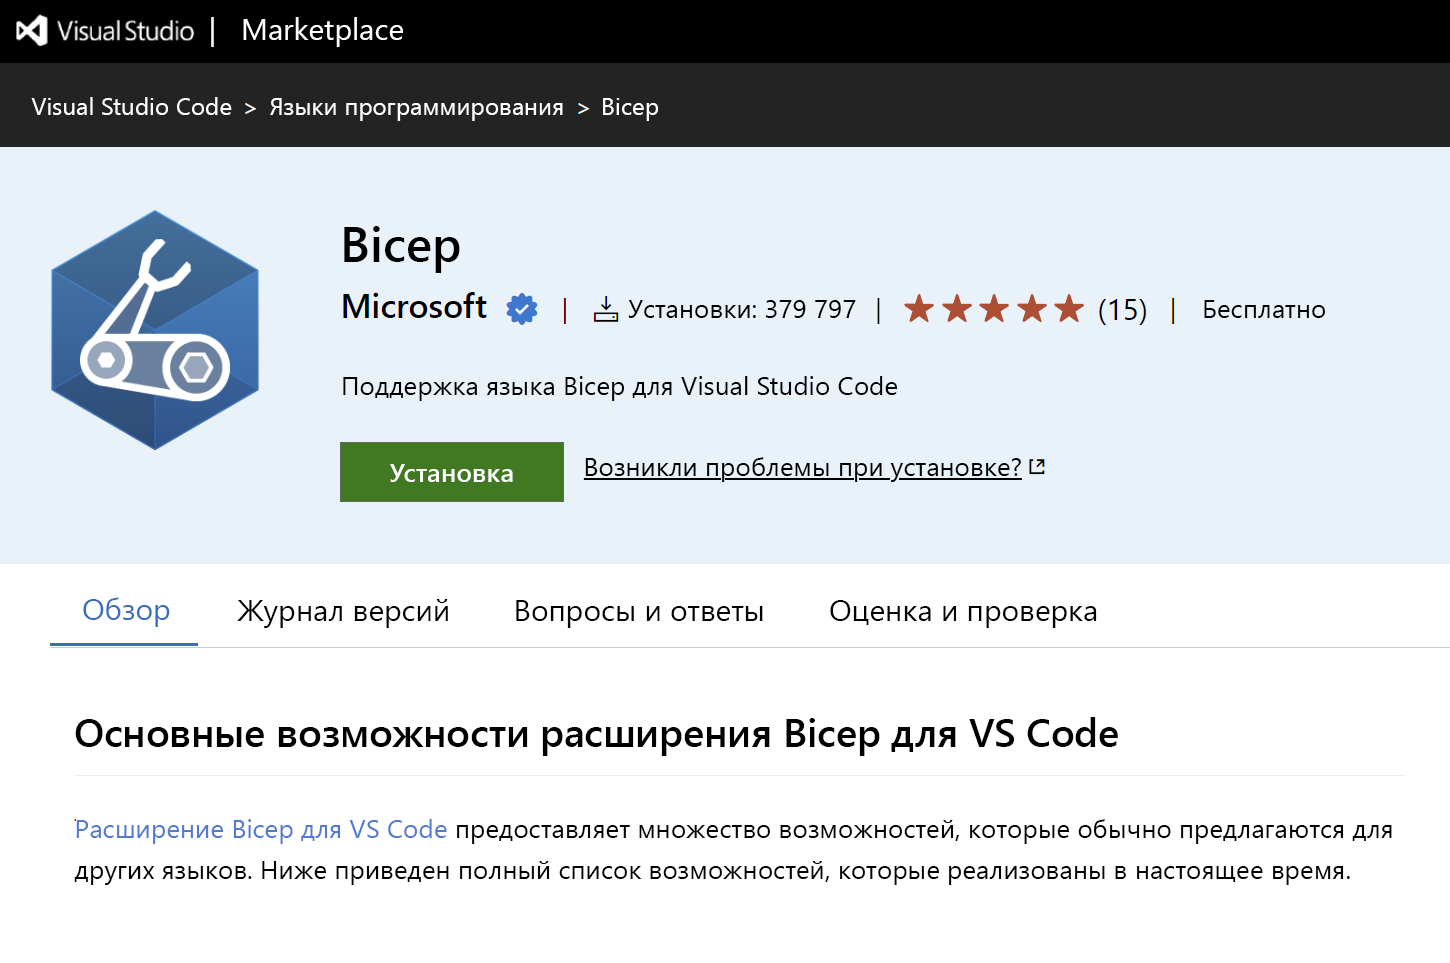 Снимок экрана: расширение Bicep из VS Code Marketplace.